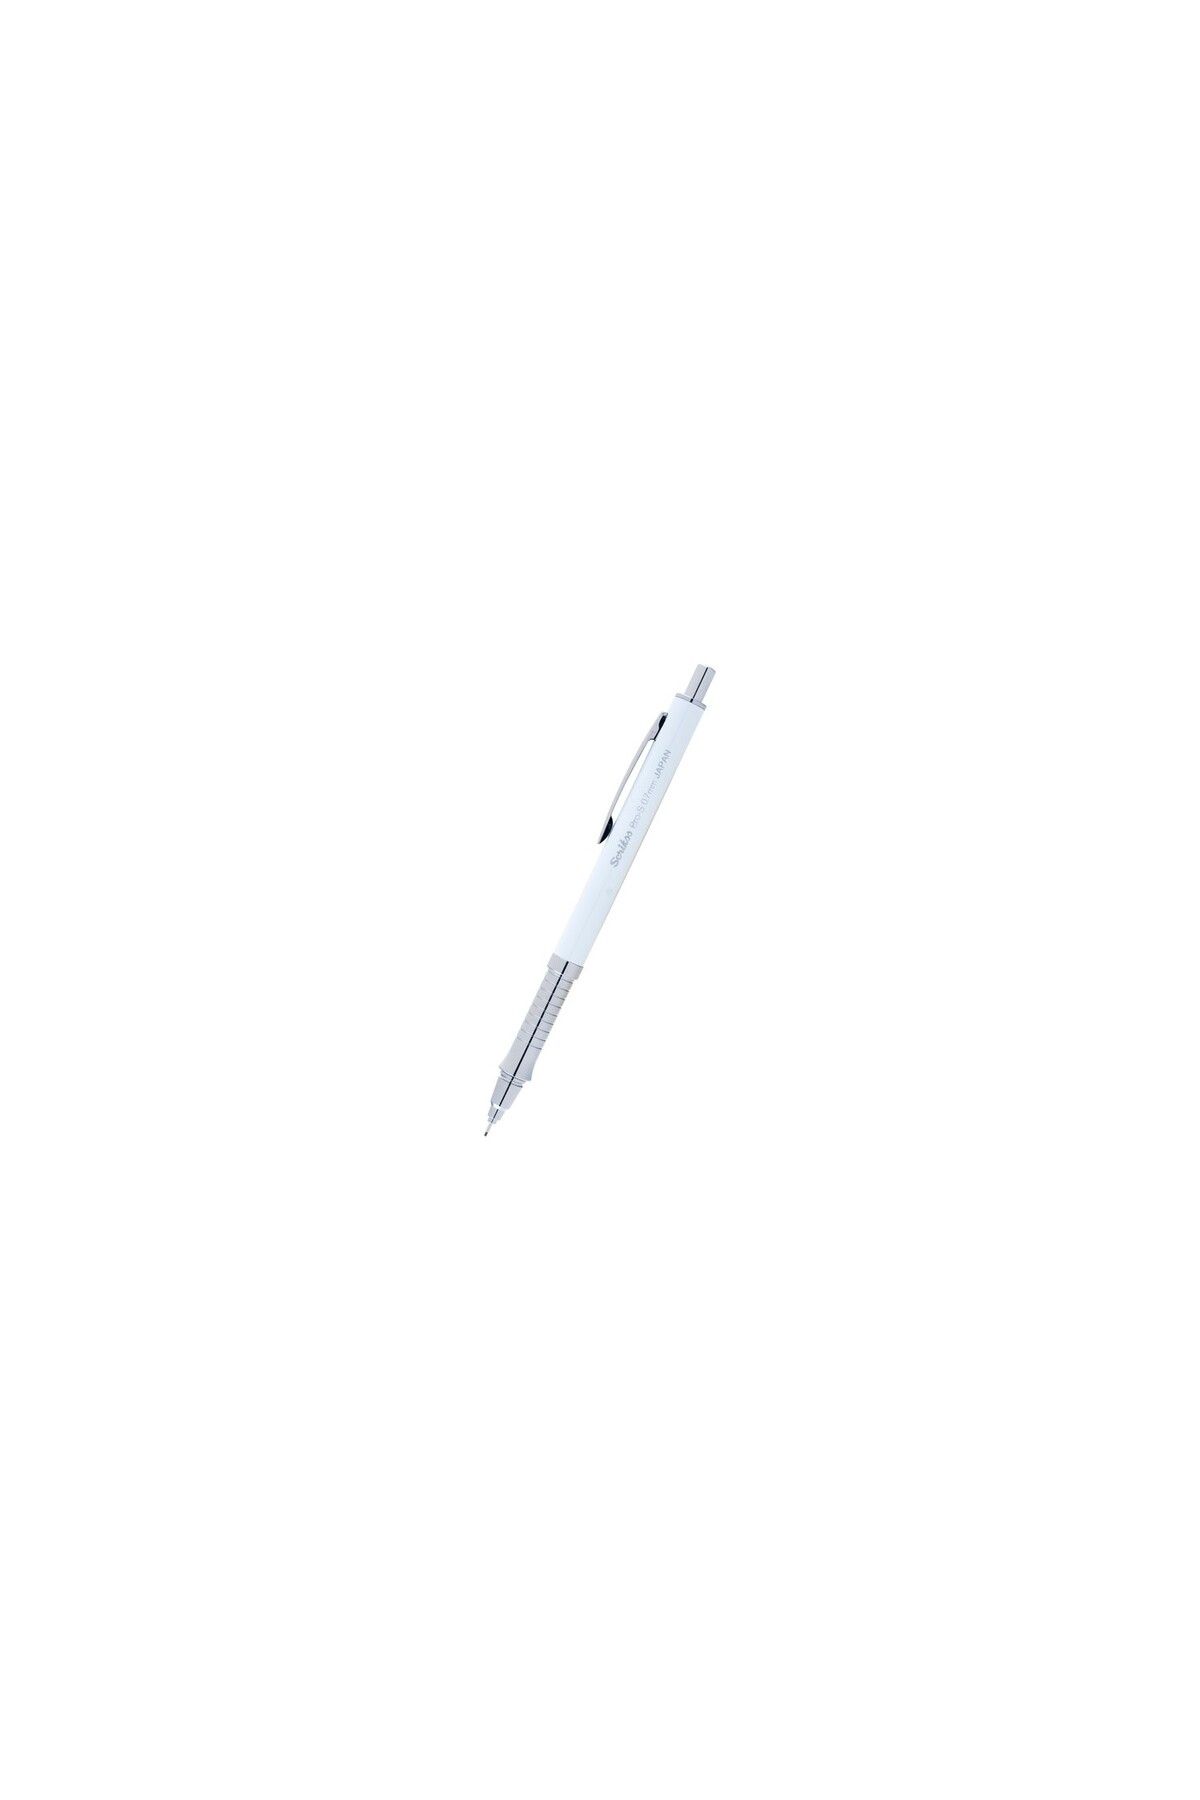 sommeow Versatil Kalem Pro-S 0.7Mm Beyaz